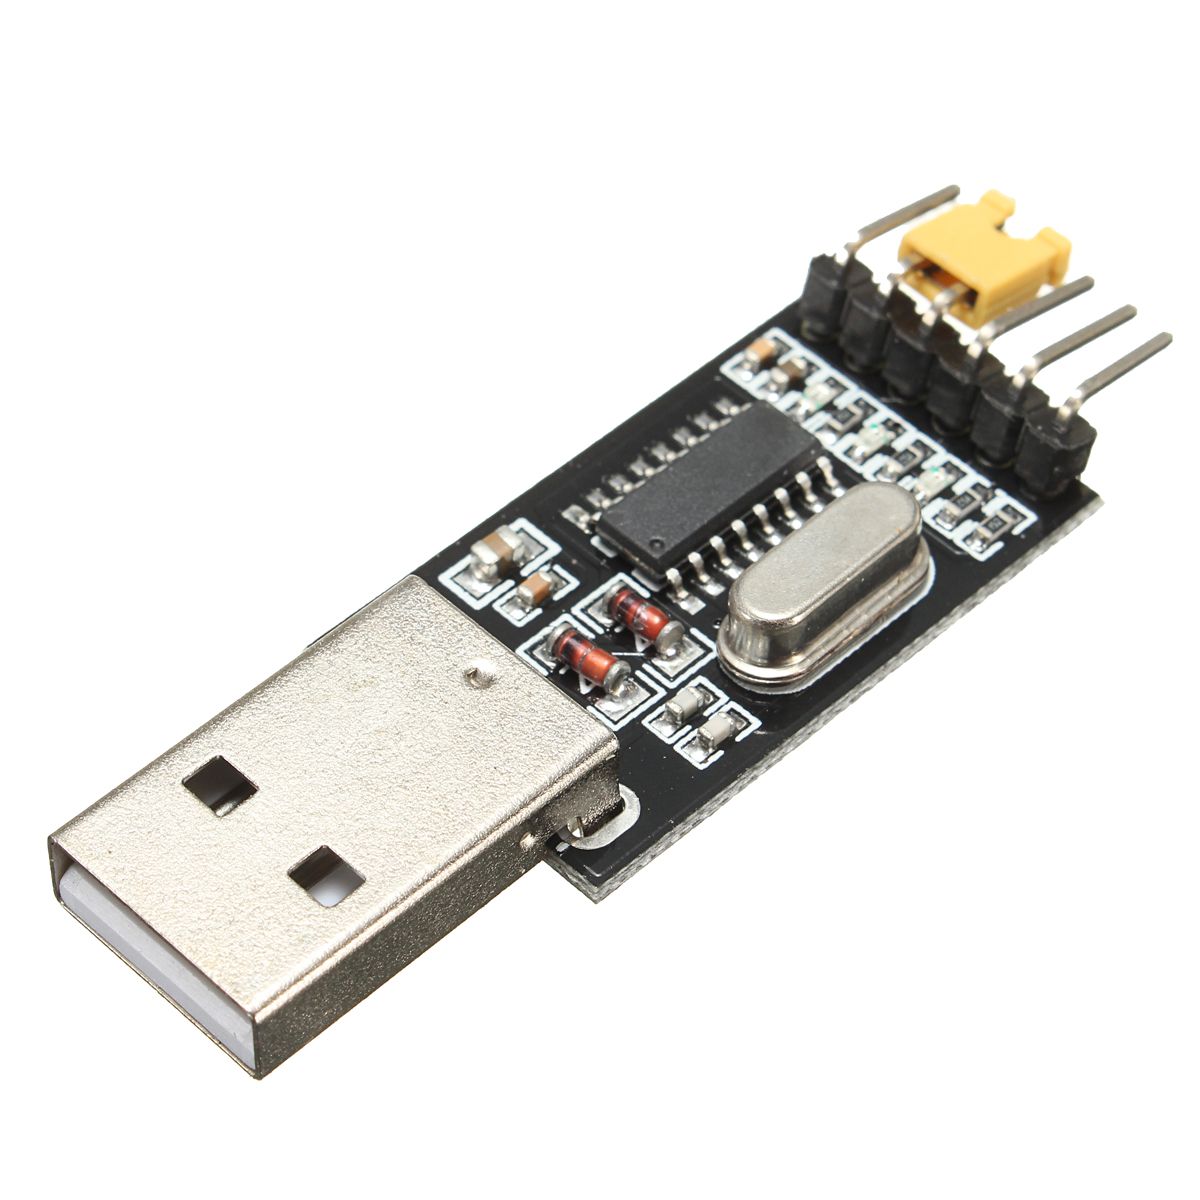 5pcs-33V-5V-USB-to-TTL-Convertor-CH340G-UART-Serial-Adapter-Module-STC-1314966